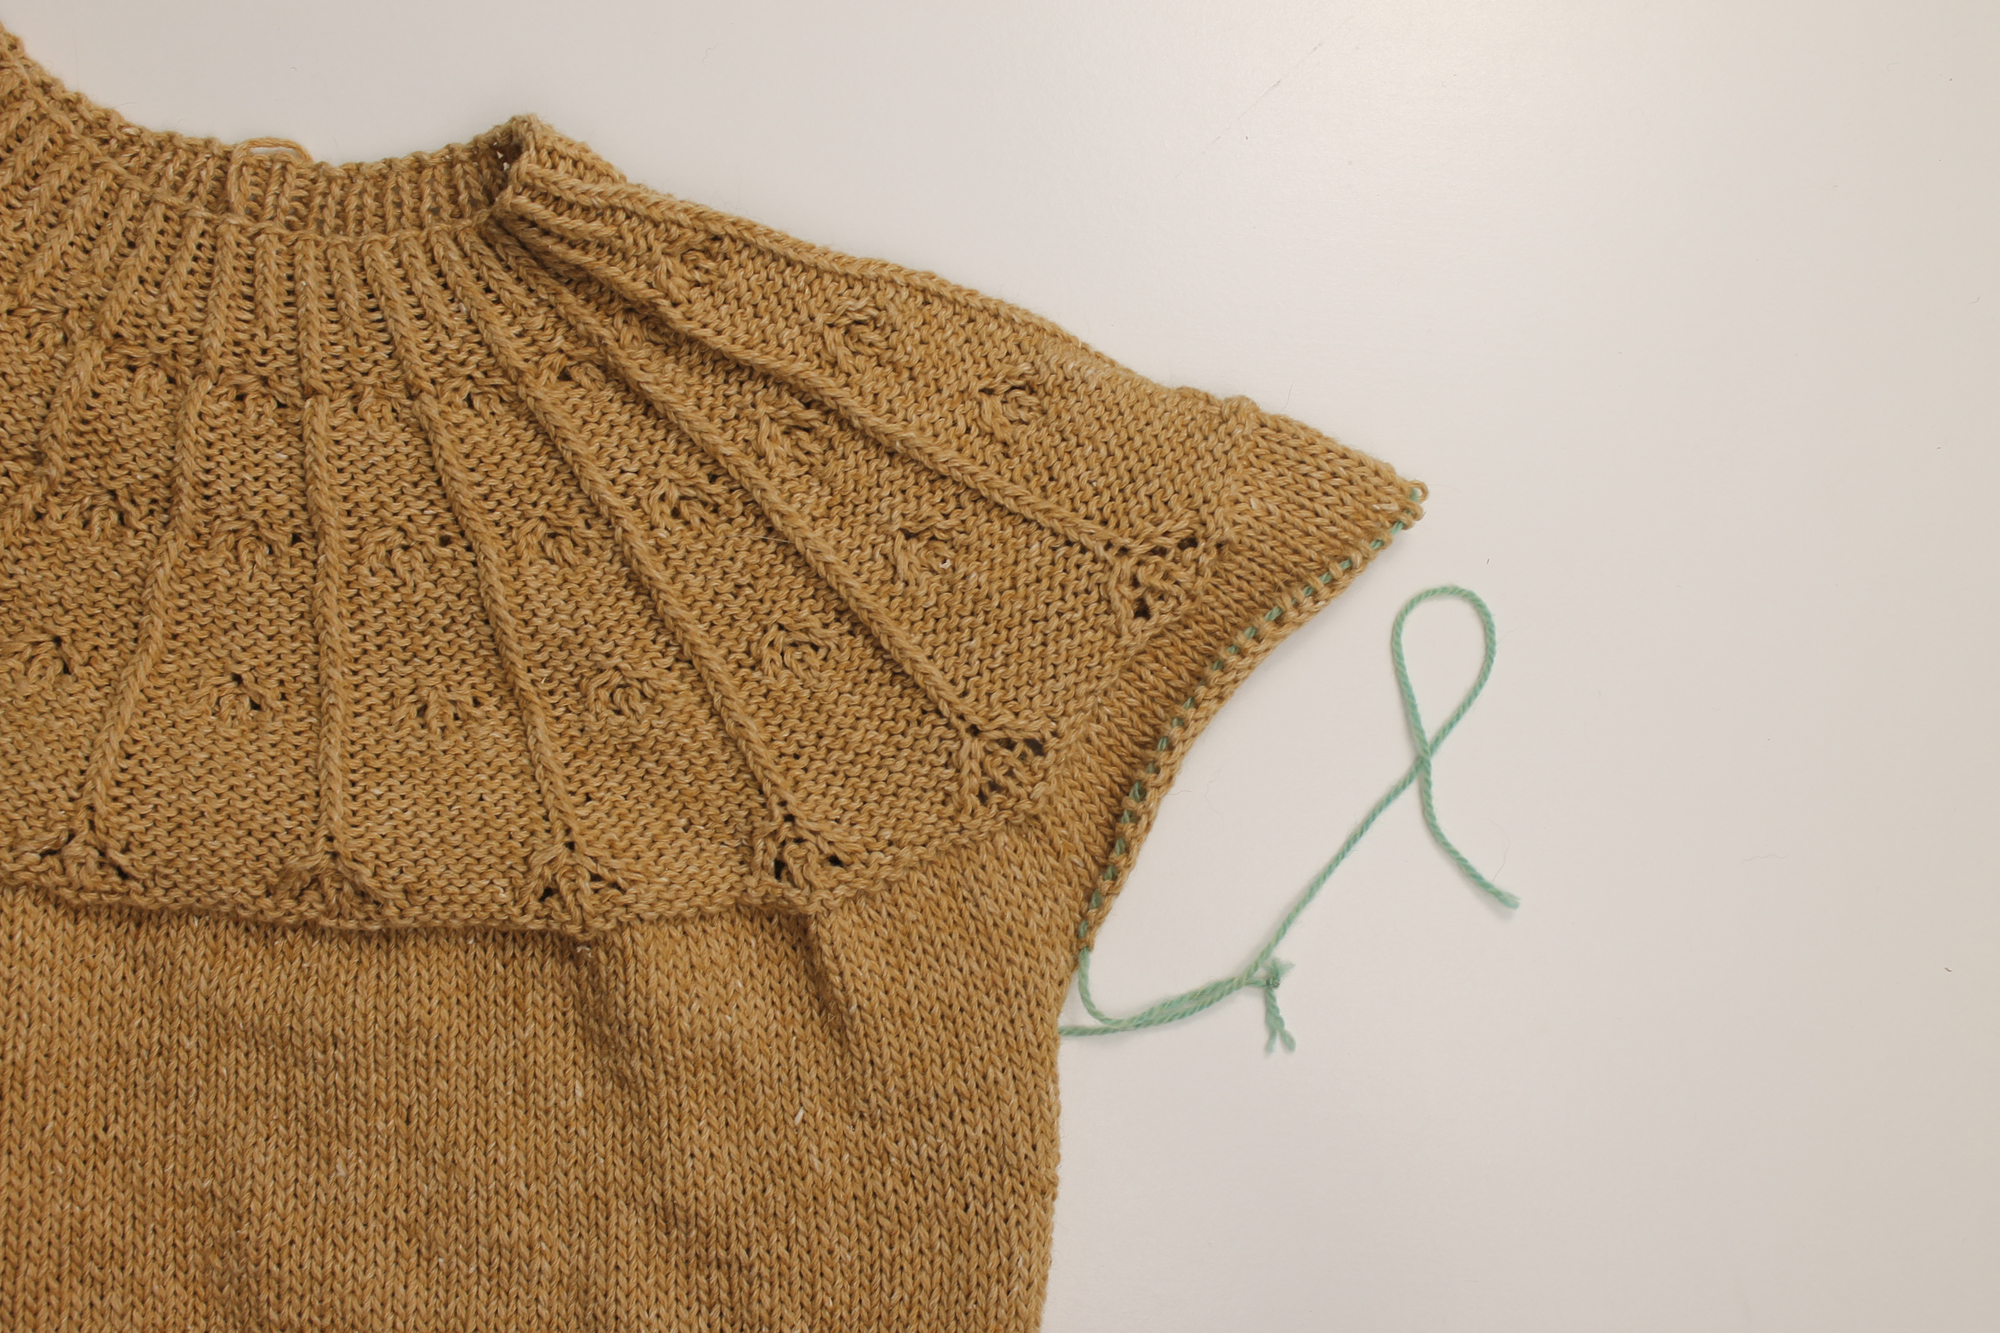 Knitting corner stitches on a sleeve